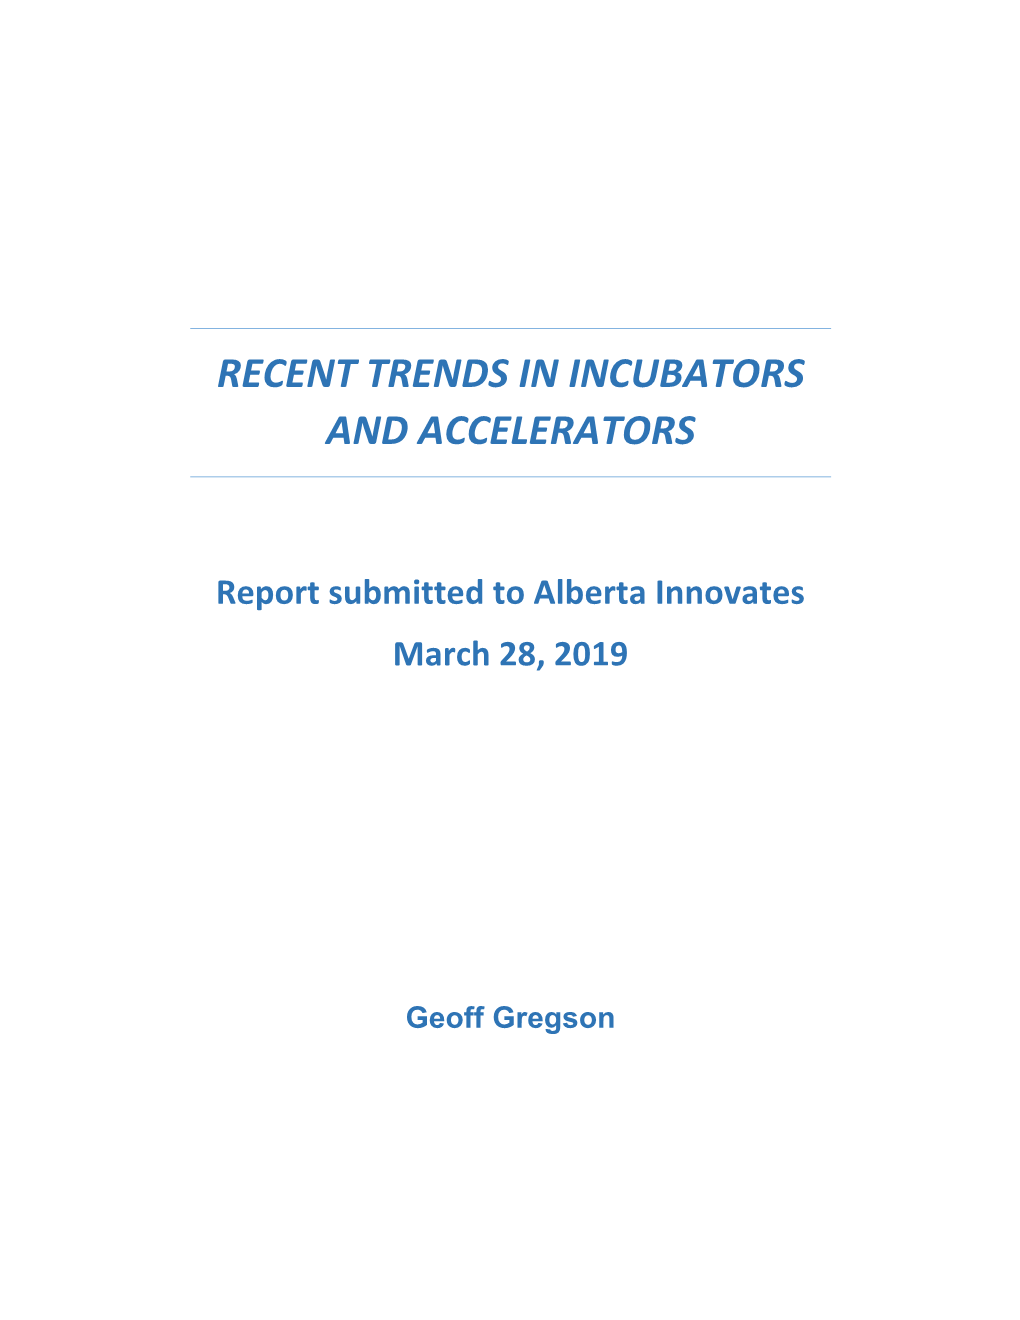 Recent Trends in Incubators and Accelerators